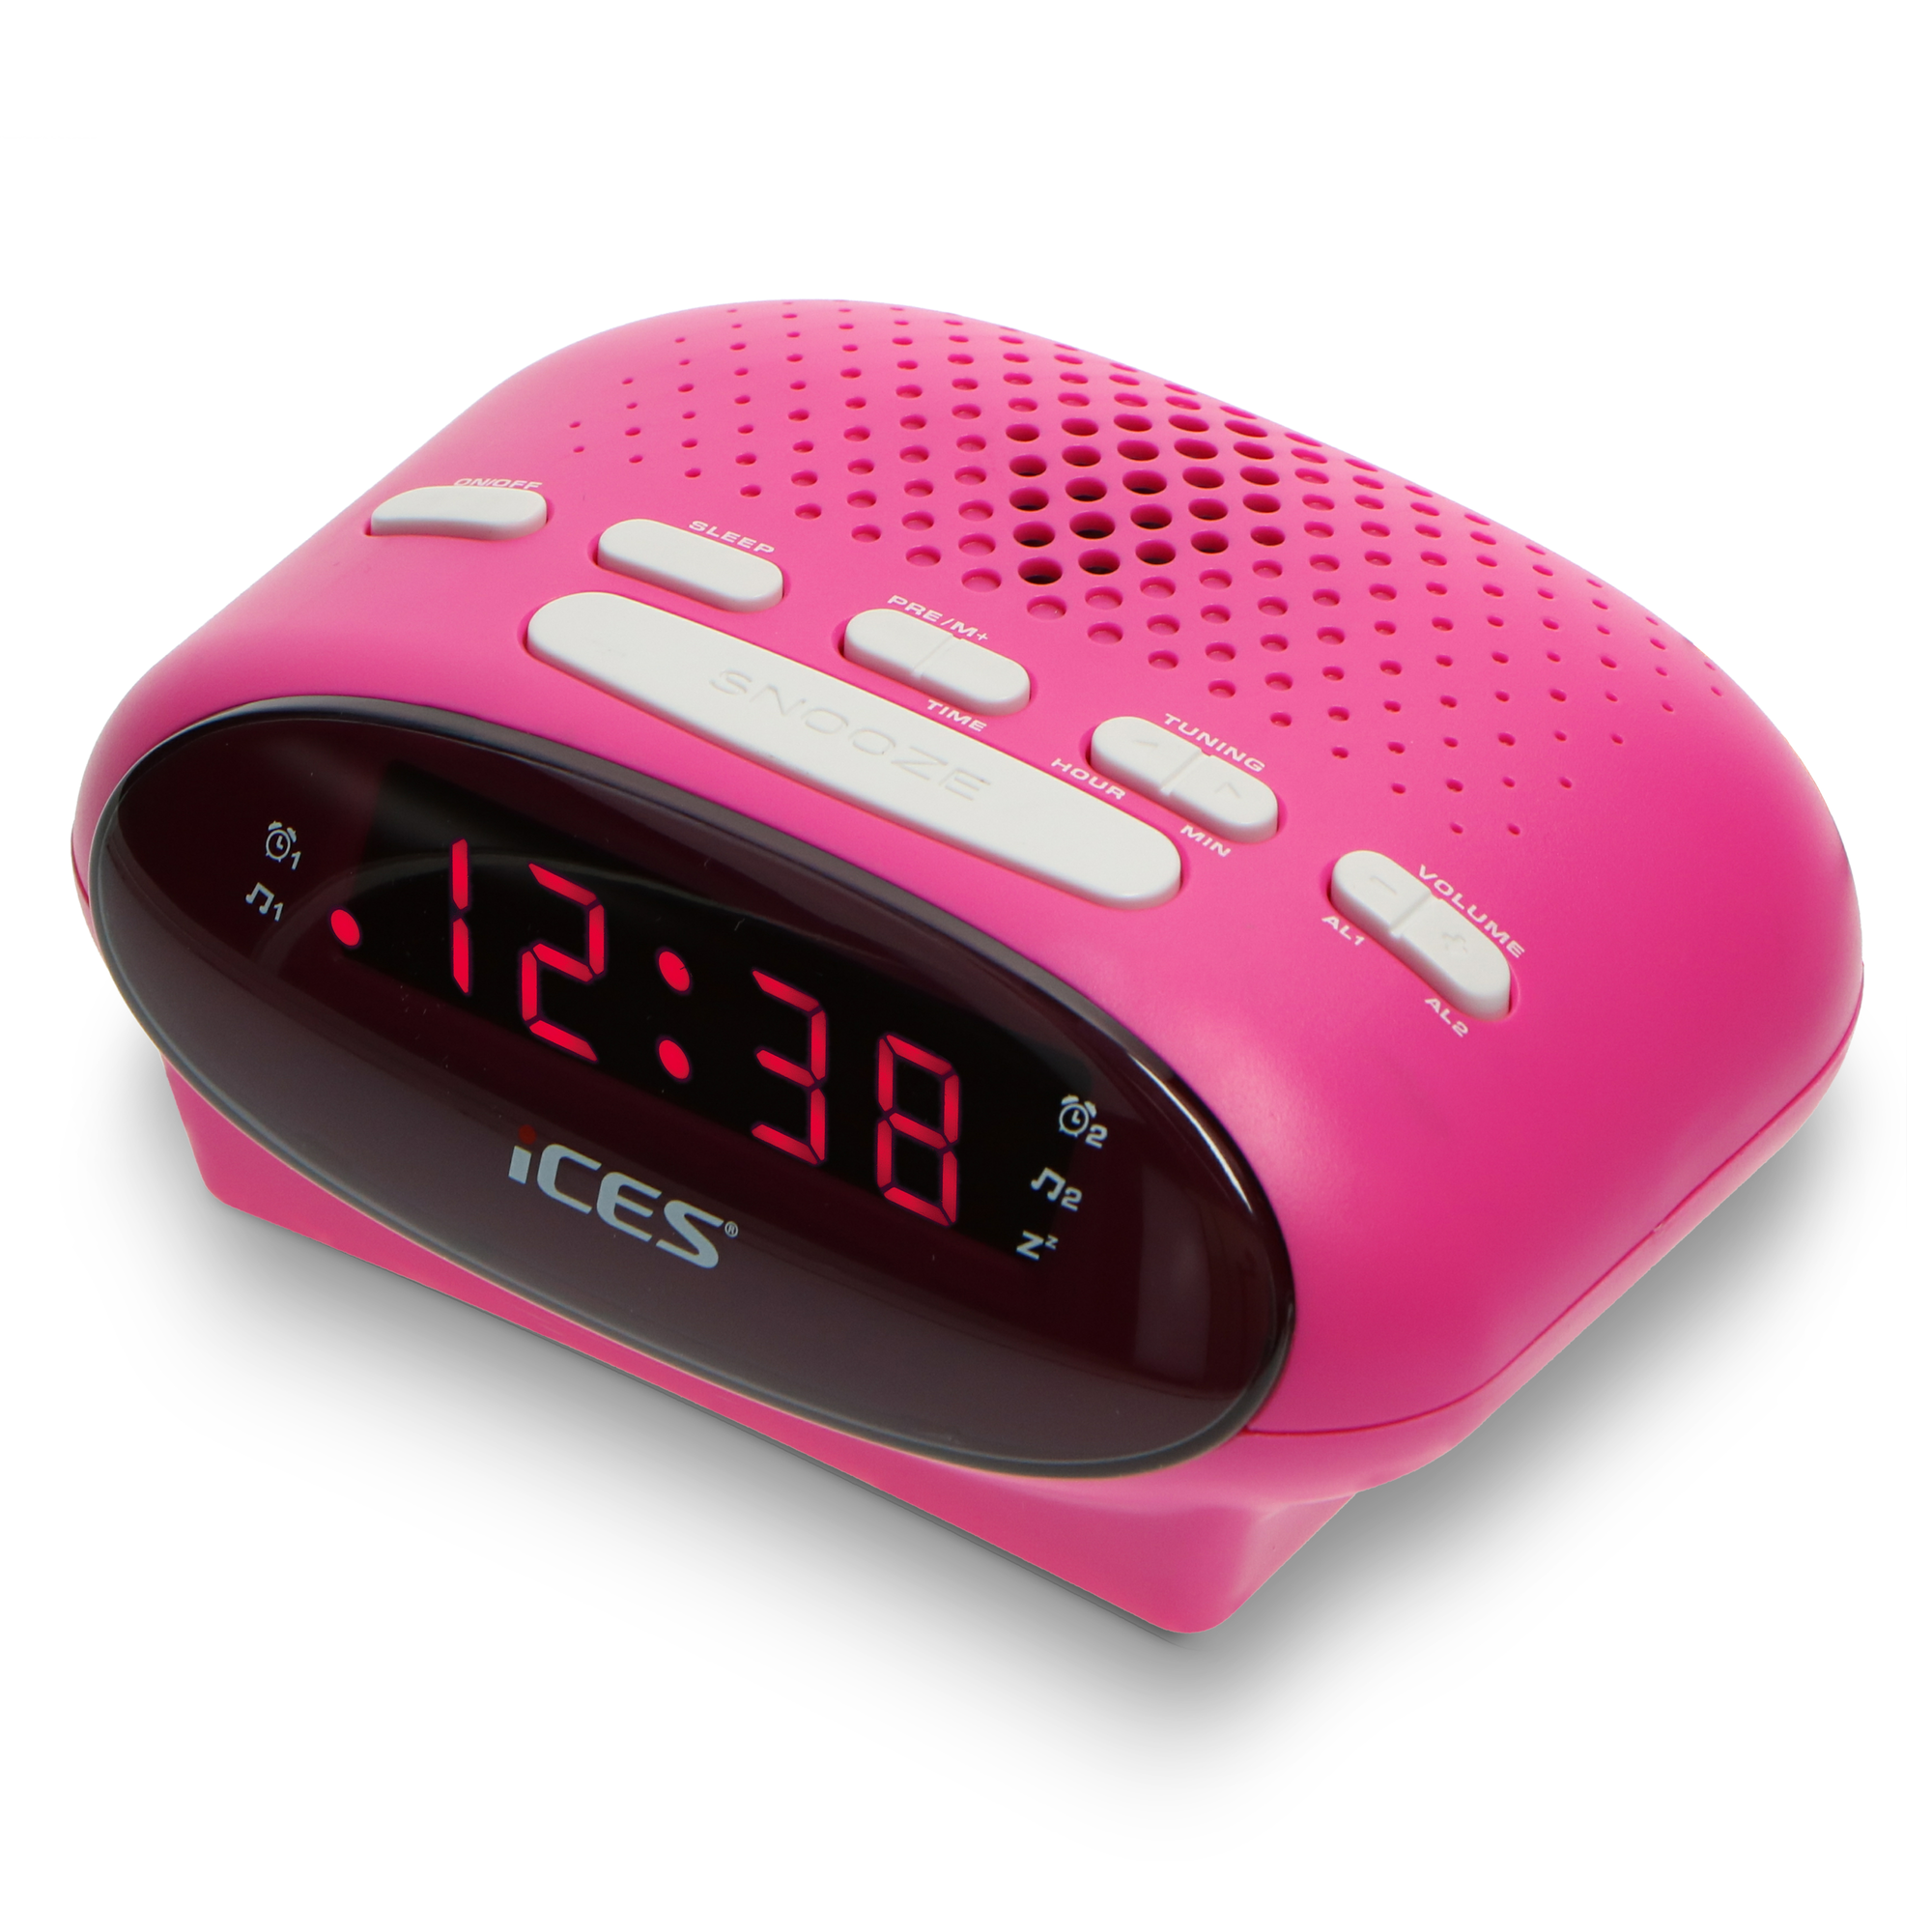 ICES Pink FM, ICR-210 Radiowecker, Pink